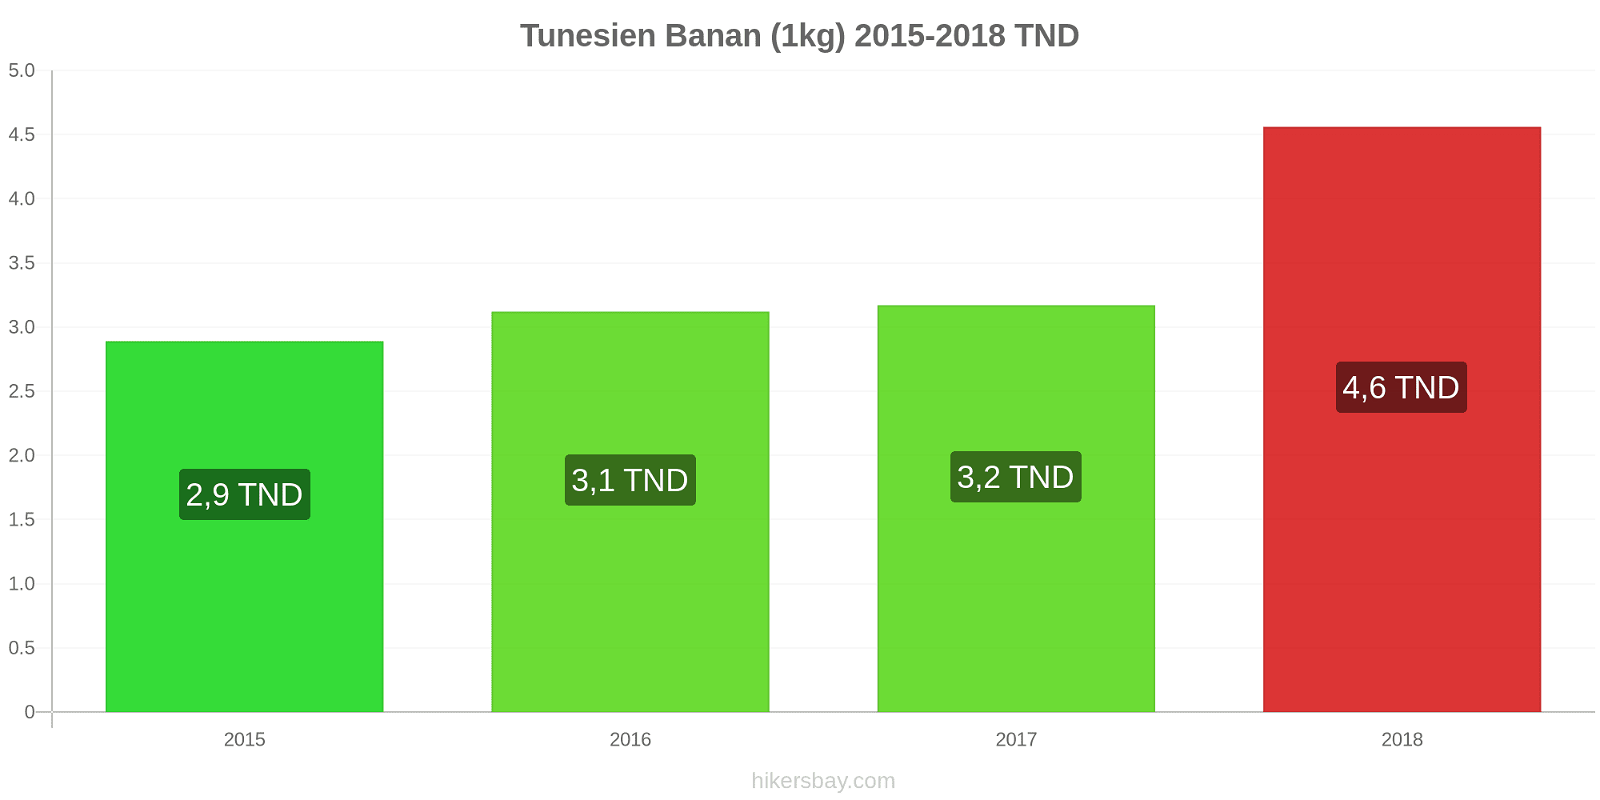 Tunesien prisændringer Bananer (1kg) hikersbay.com